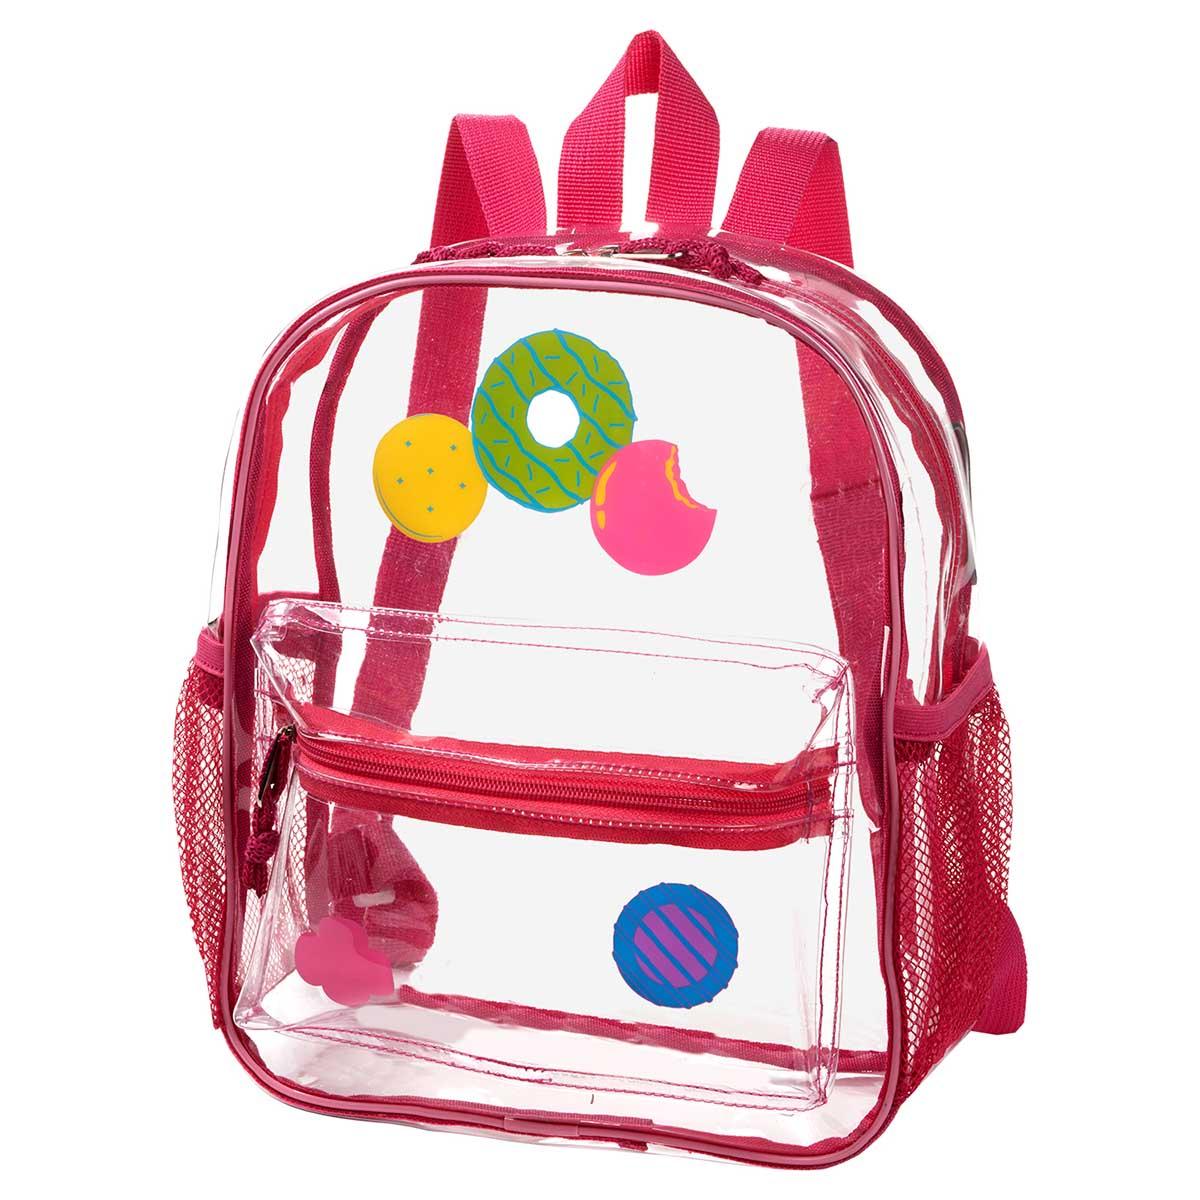 VS PINK UNIVERSITY OF LOUISVILLE CLEAR BACKPACK  Vs pink, Clear backpack,  University of louisville